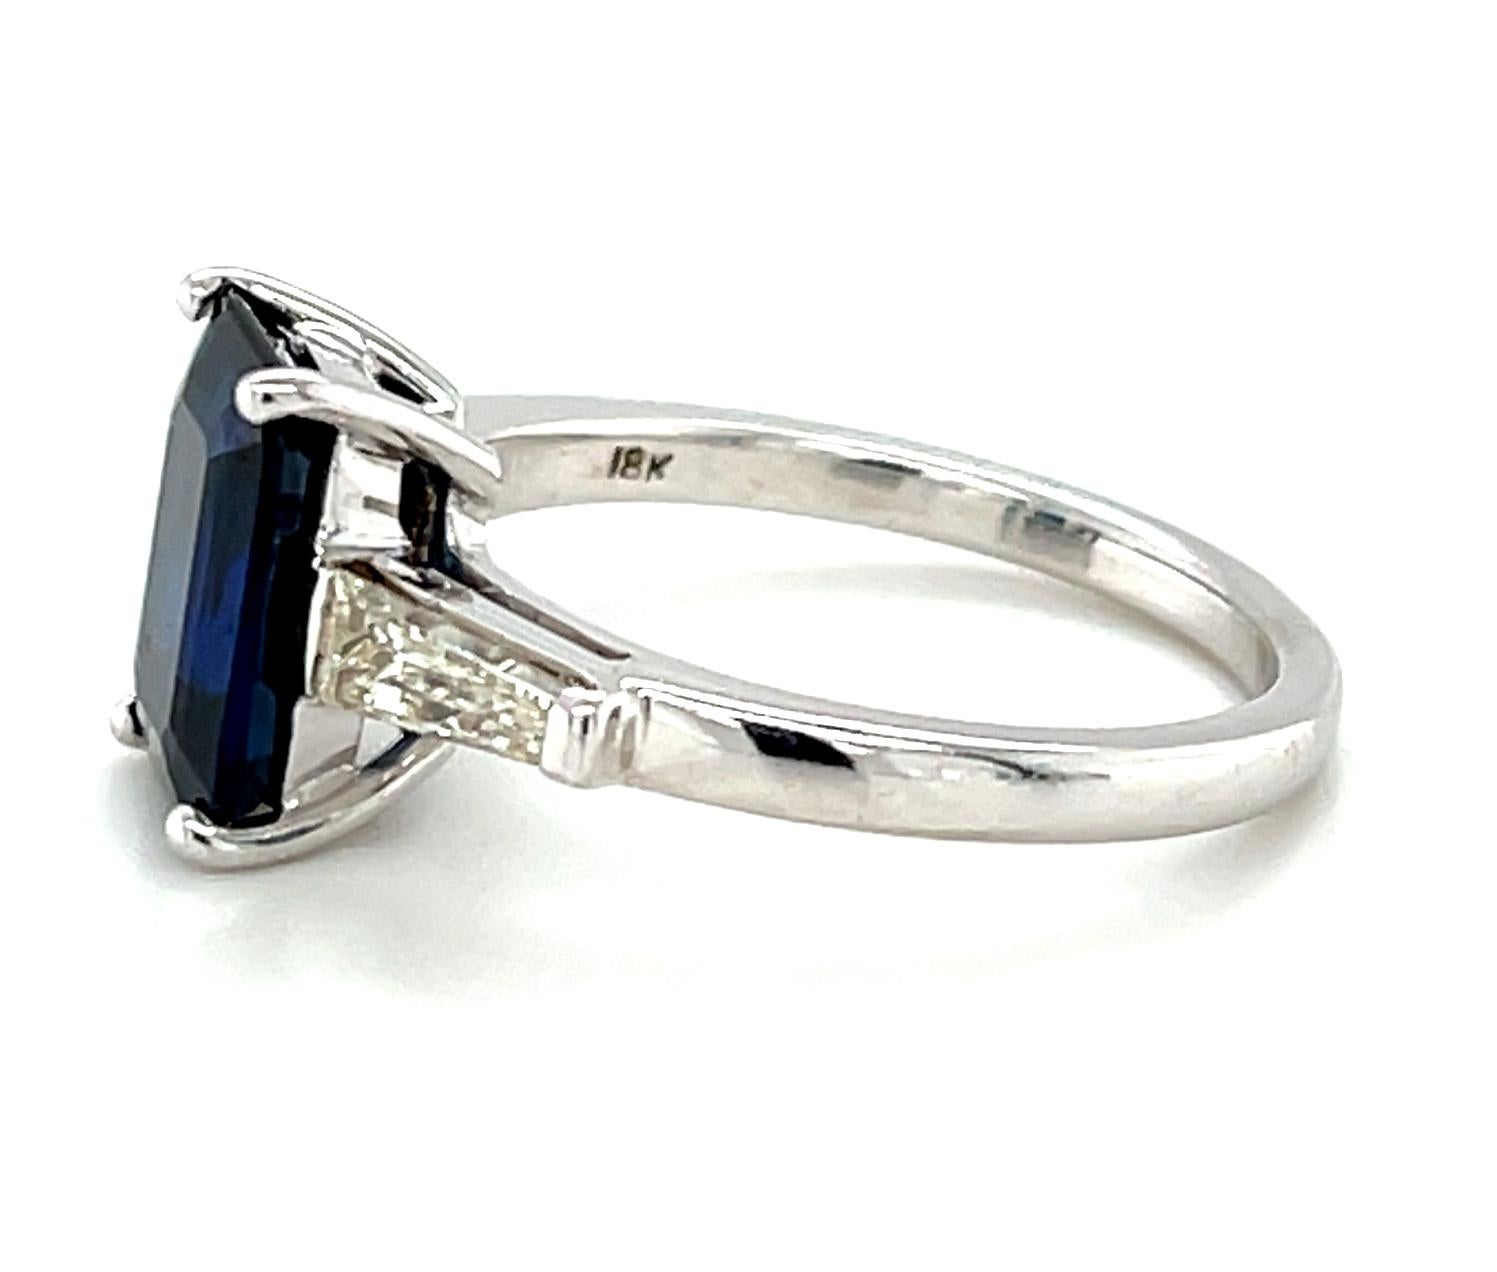 3 carat emerald cut sapphire ring